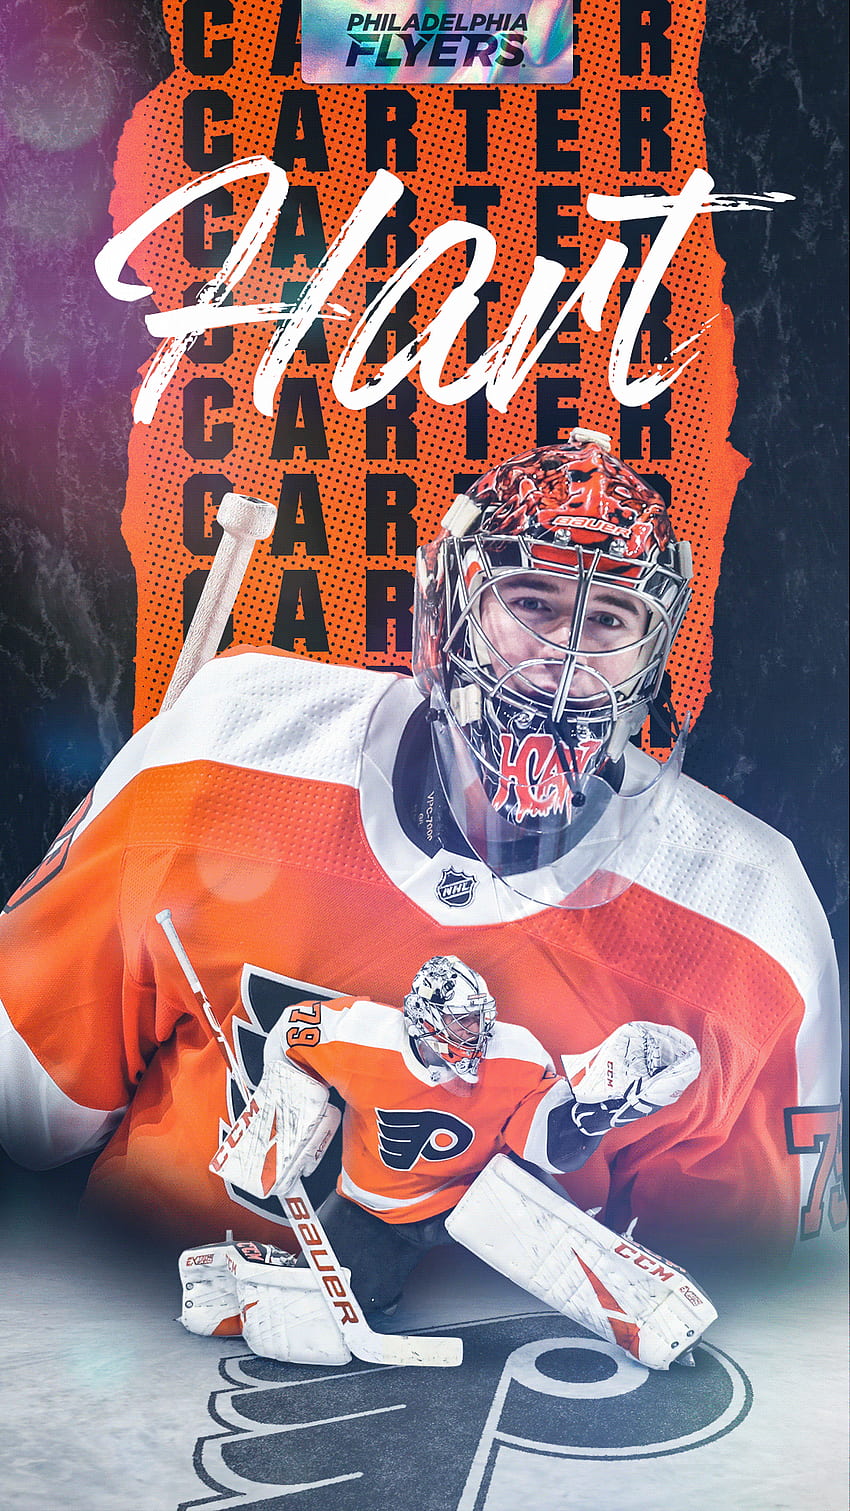 Carter Hart Philadelphia Flyers Fanatics Authentic Unsigned Orange Jersey Pad Save Photograph